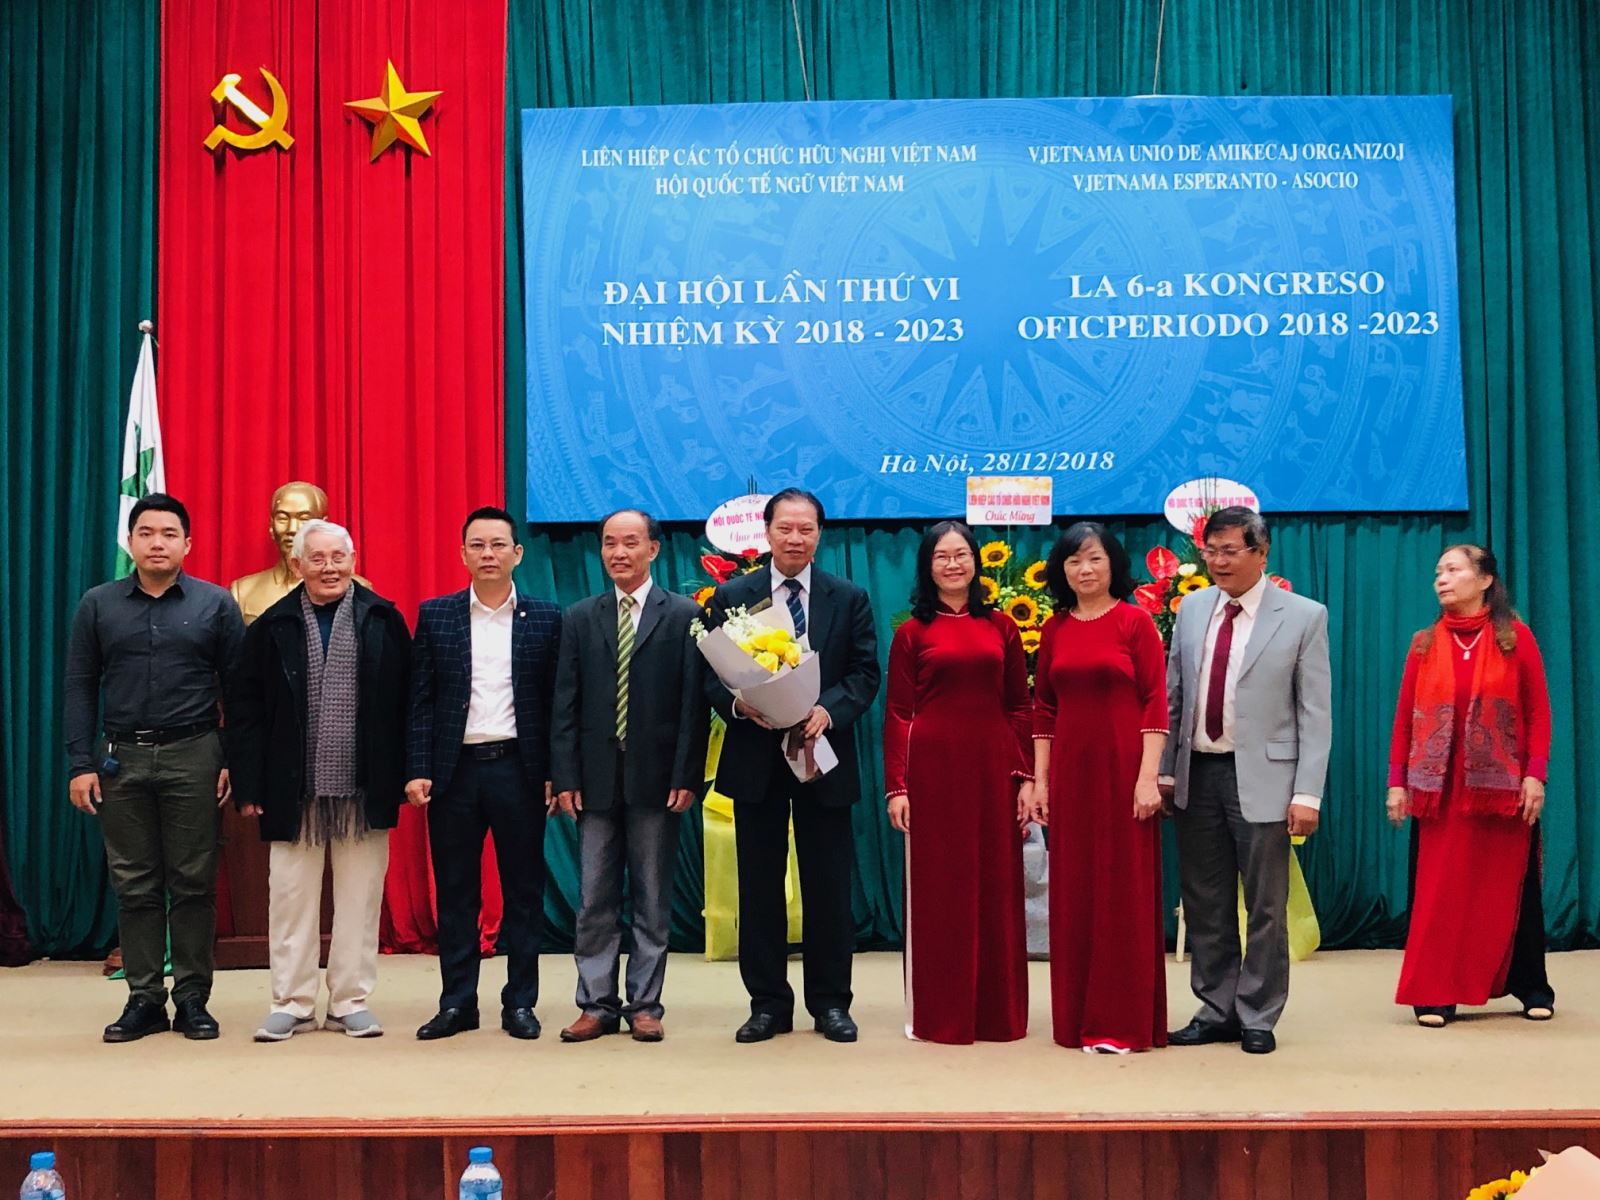 Vietnam Esperanto movement contributes to people-to-people diplomacy activities